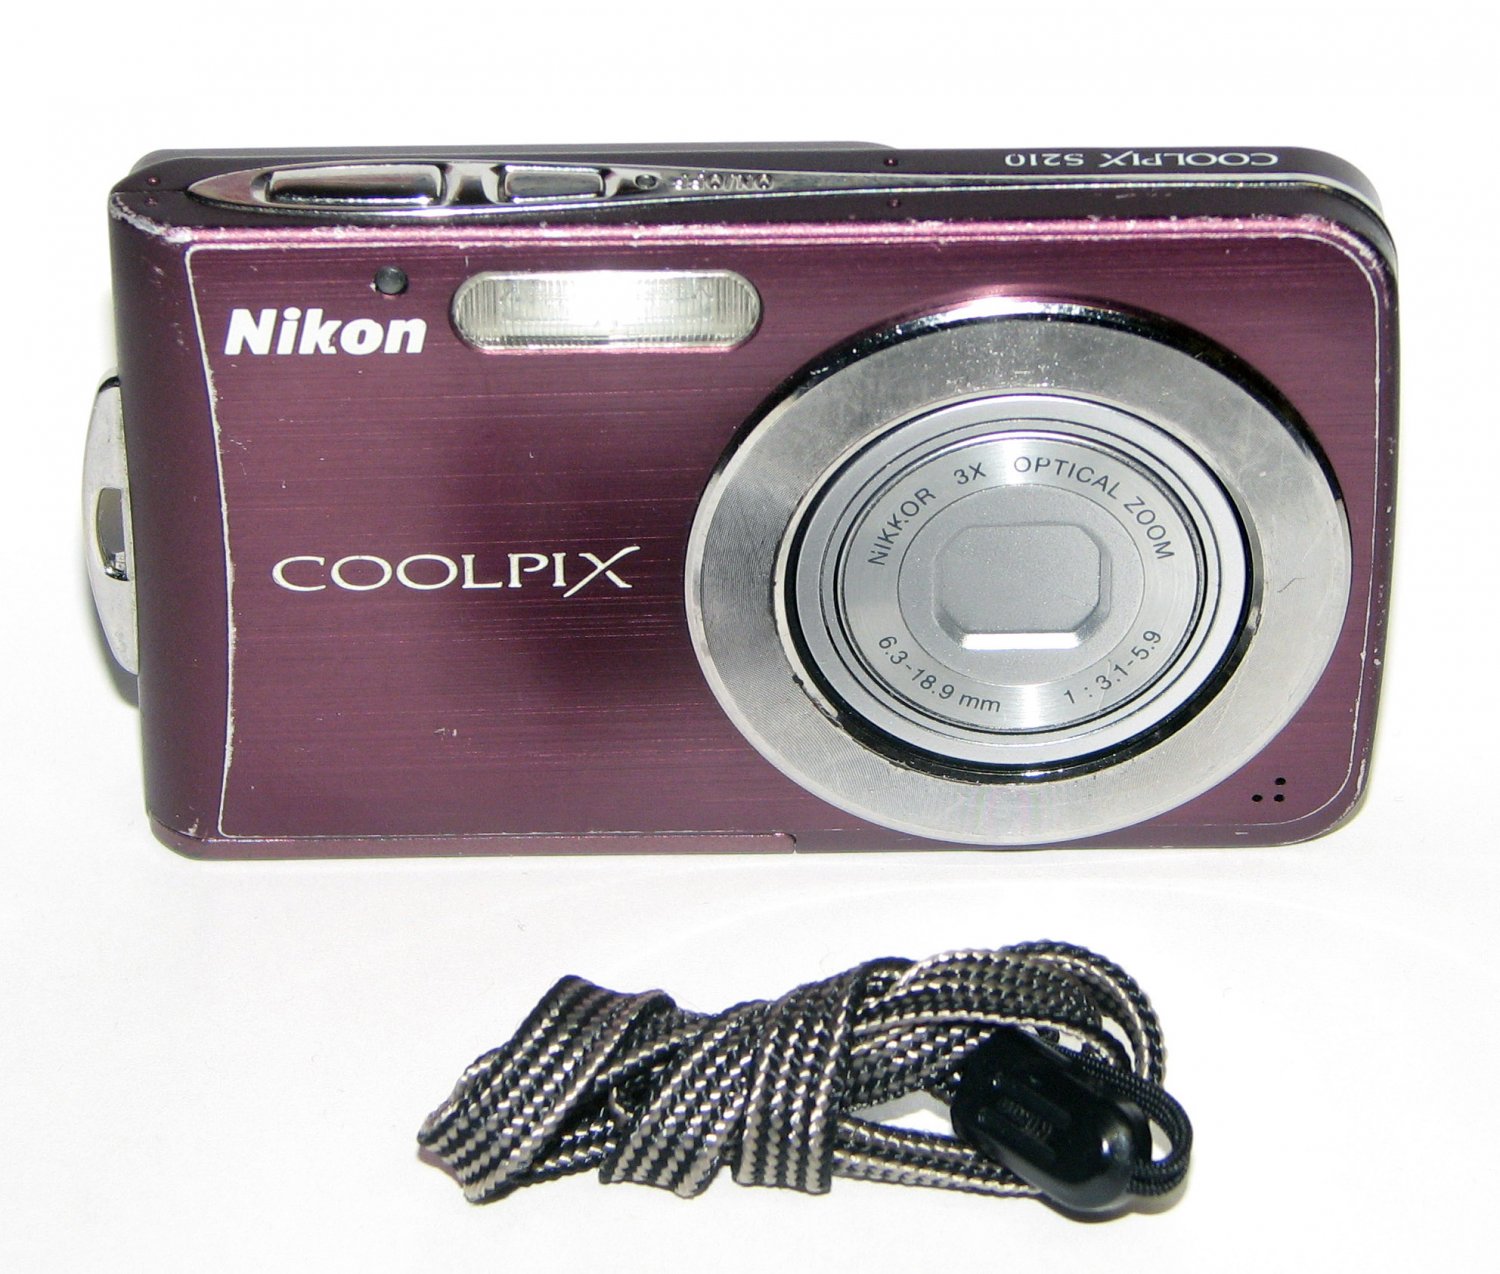 Nikon COOLPIX S210 8.0MP Digital Camera - Plum #0353